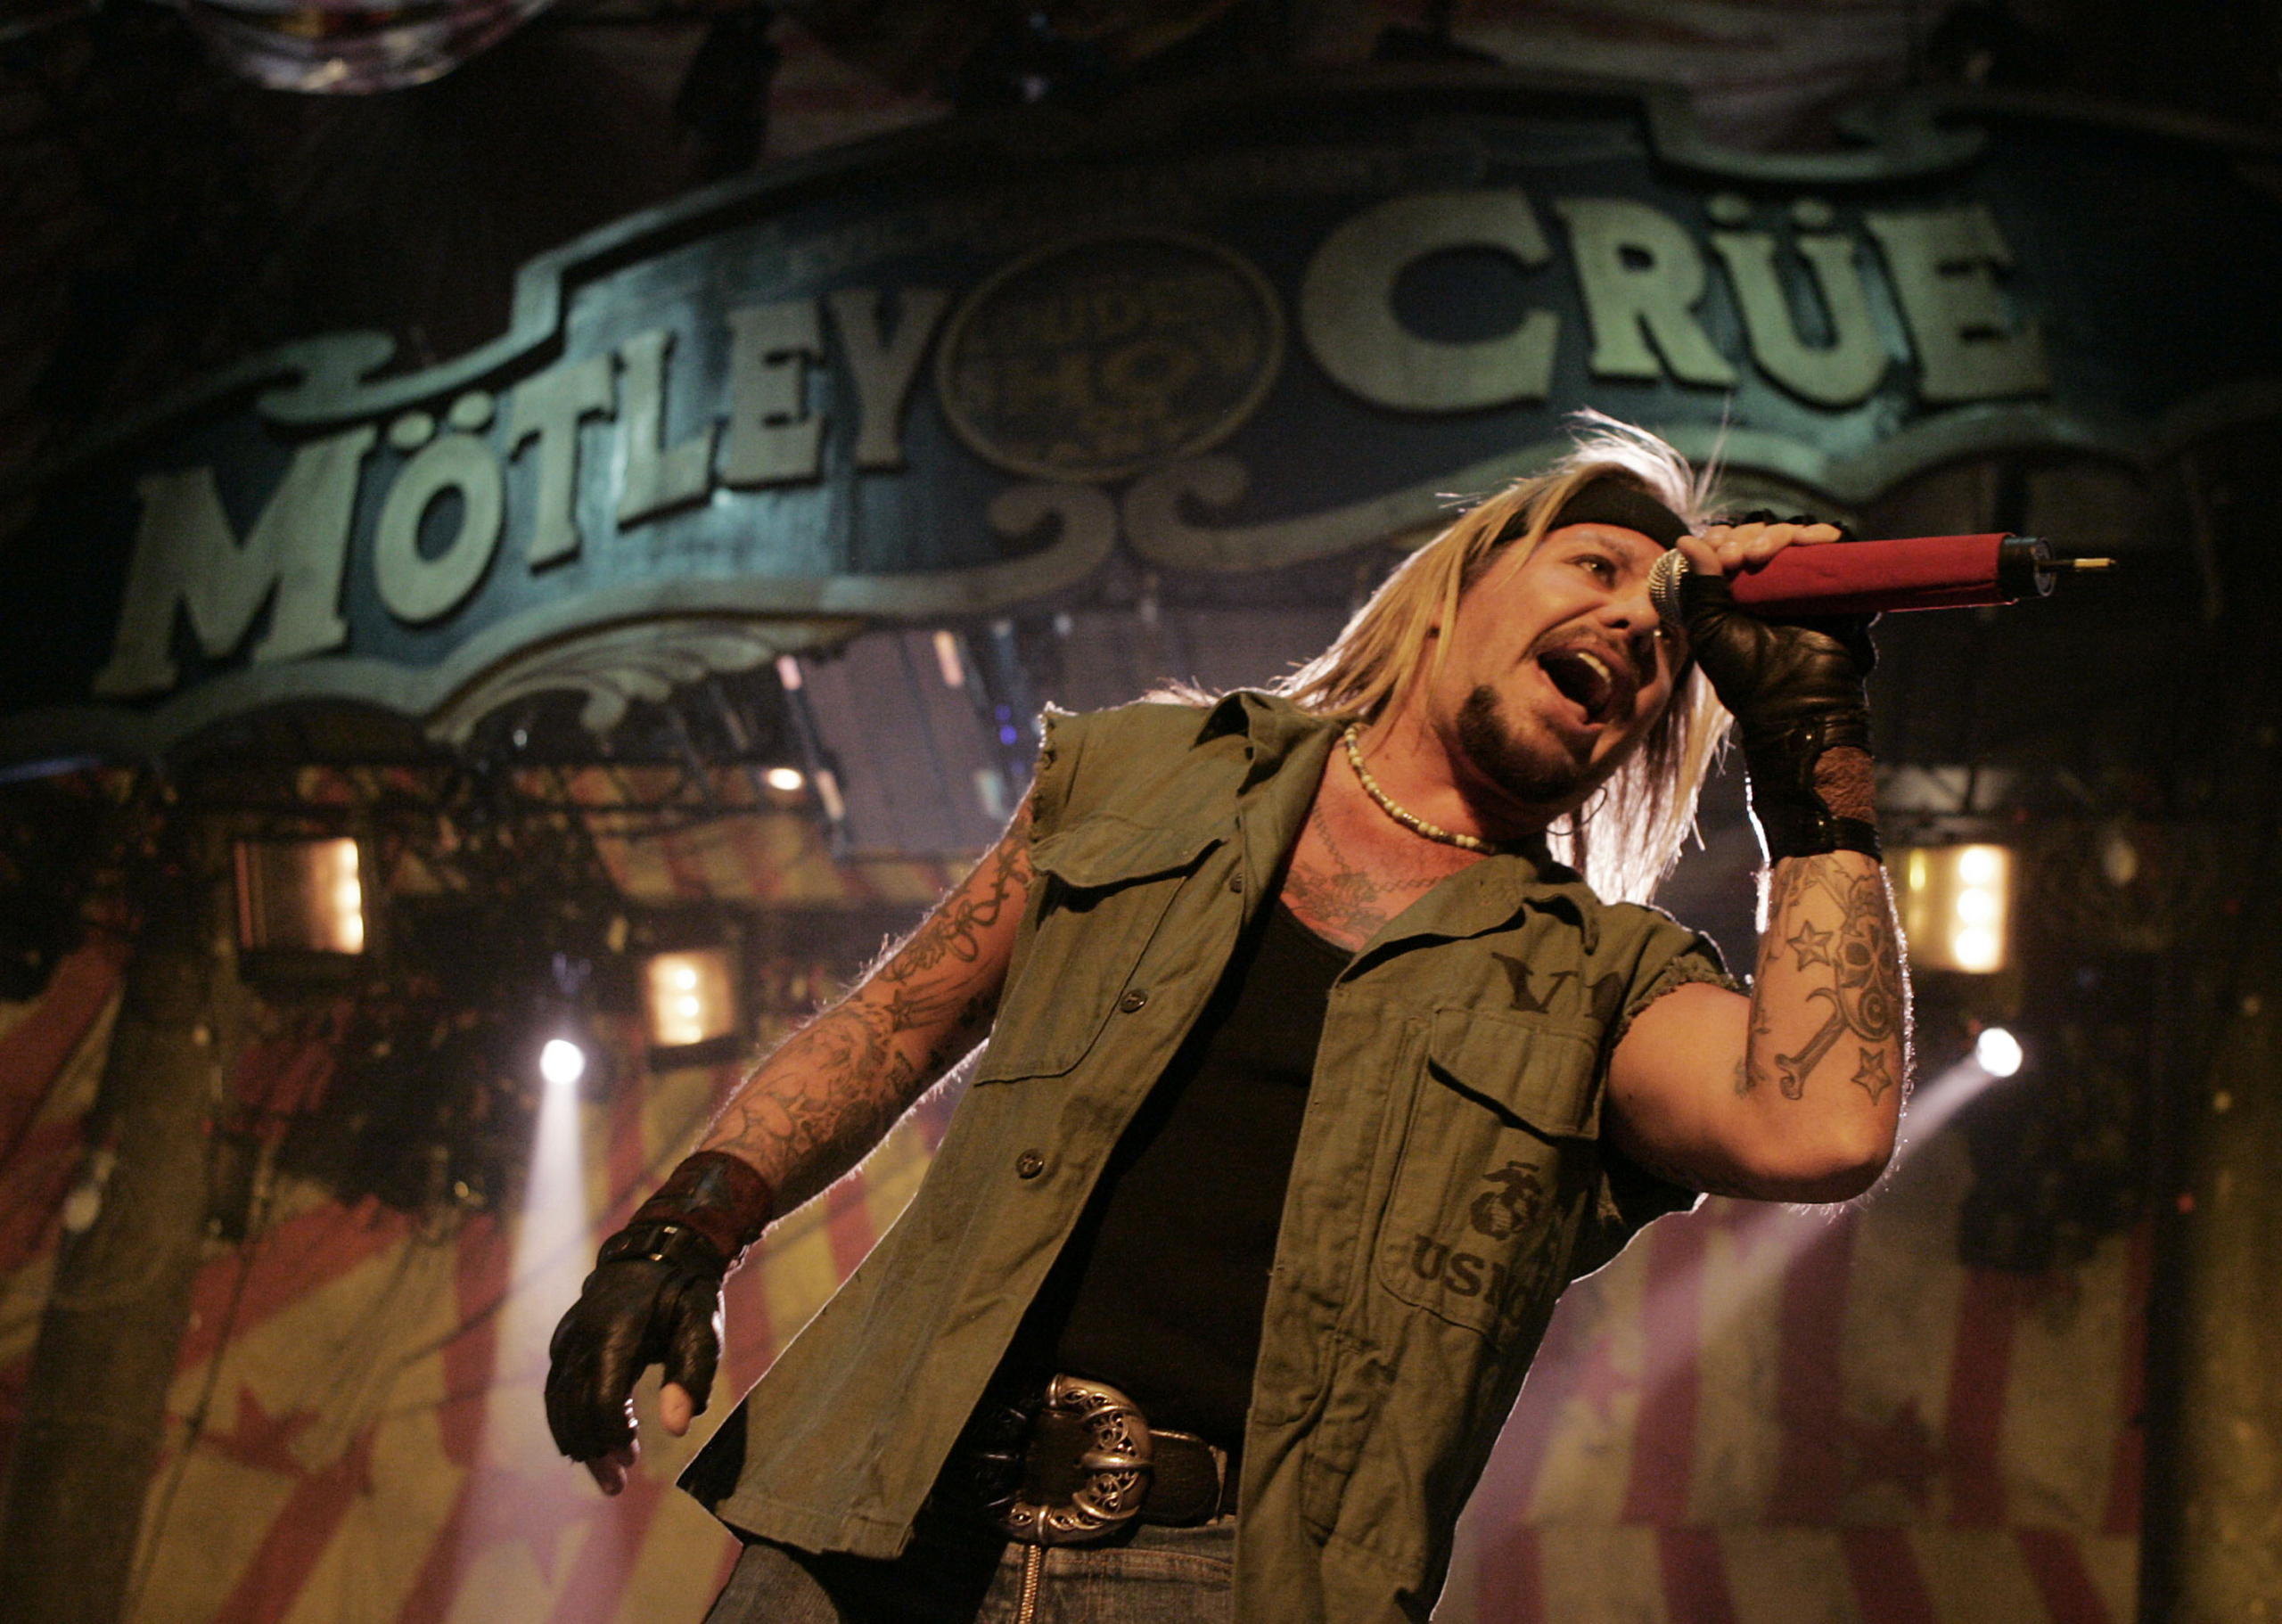 Mötley Crüe in person…